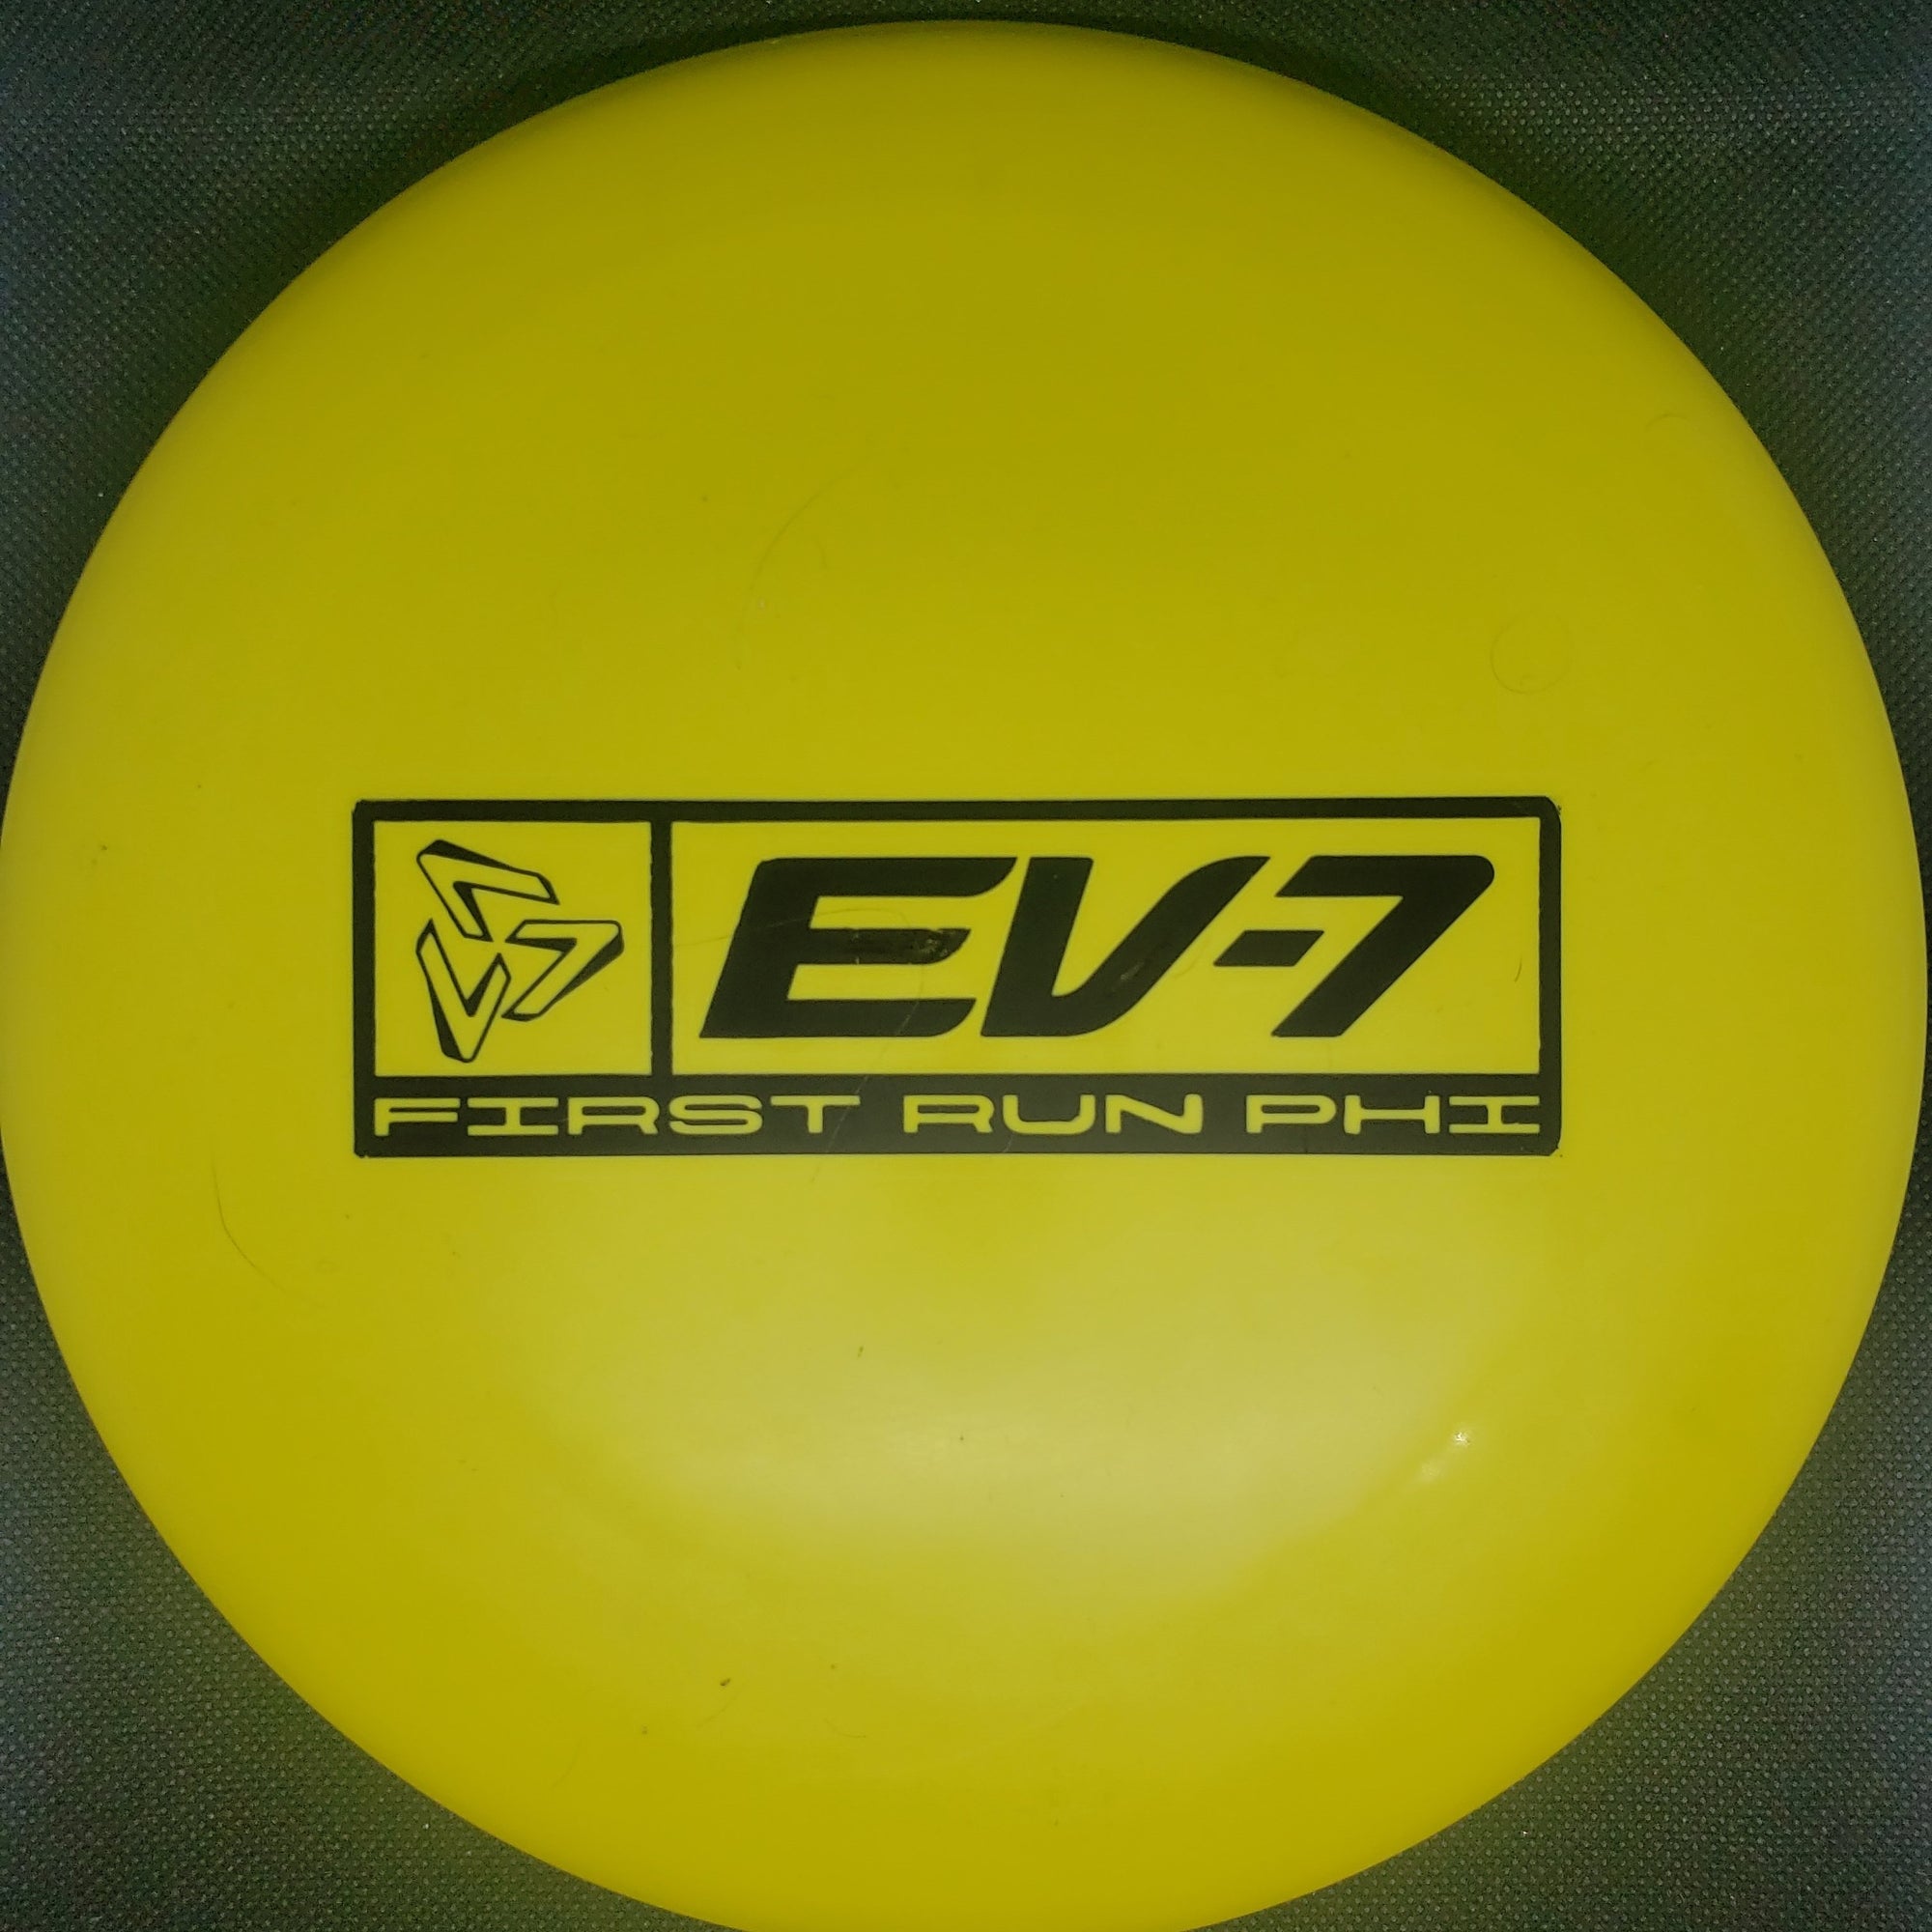 Ev7 Putter FR Yellow Black Stamp 173g Phi - OG Medium Plastic